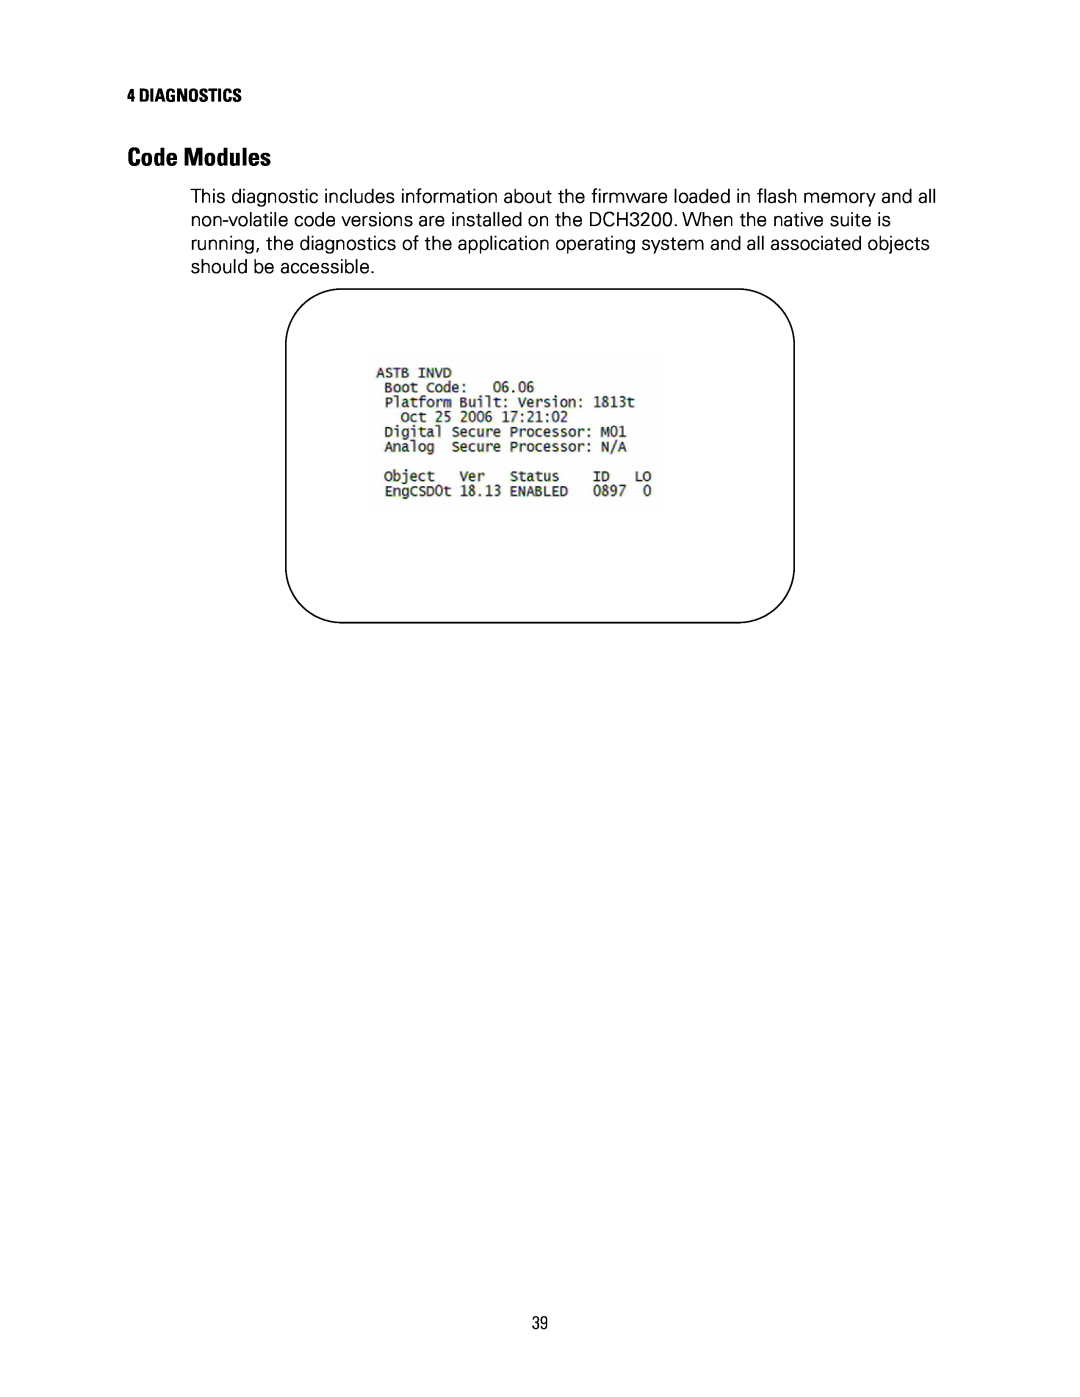 Motorola DCH3200 installation manual Code Modules, Diagnostics 